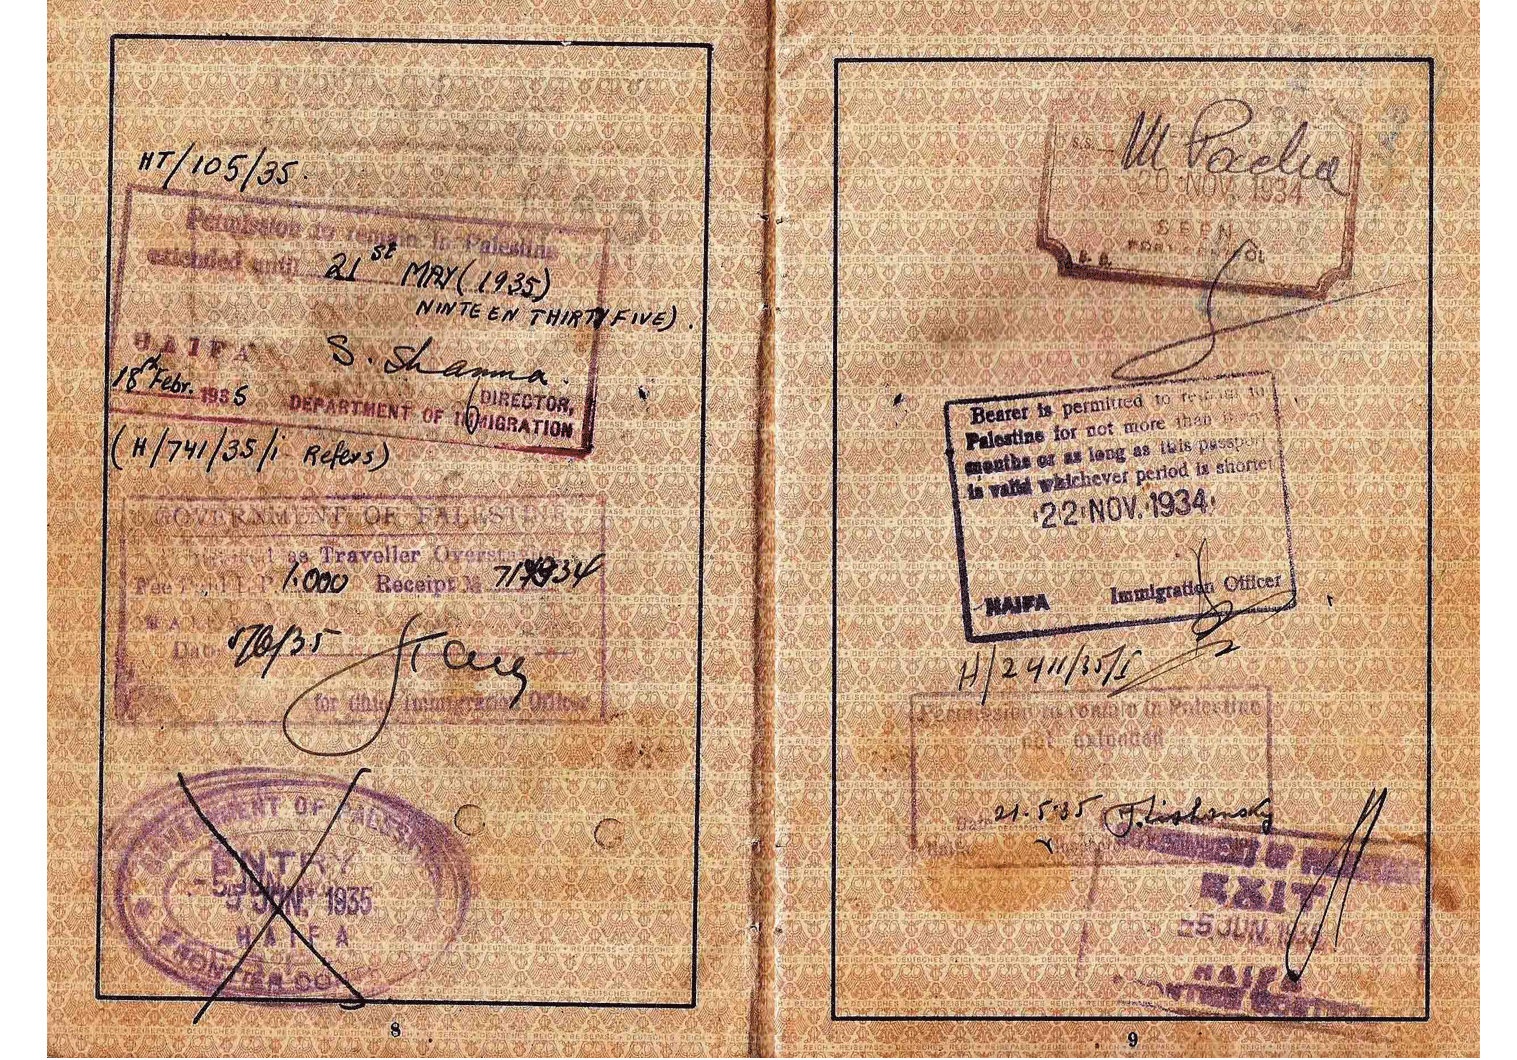 1935 entry to Palestine passport